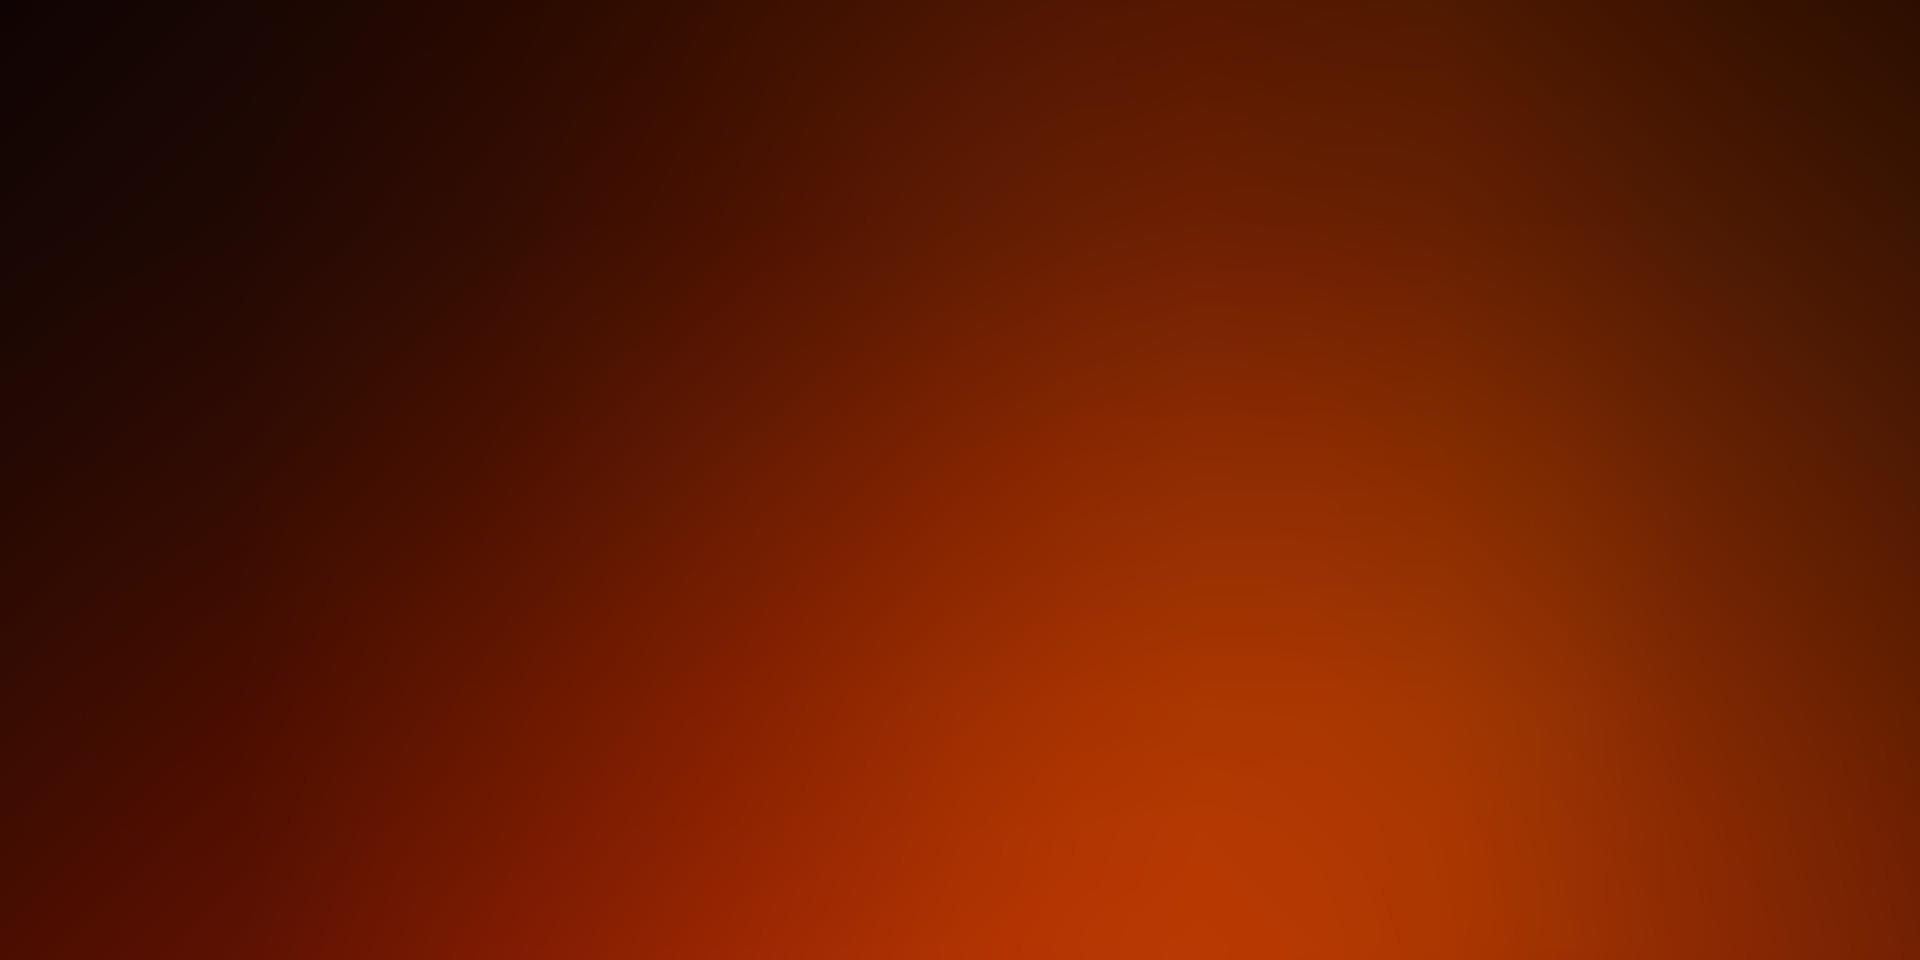 Dark Orange vector abstract layout.